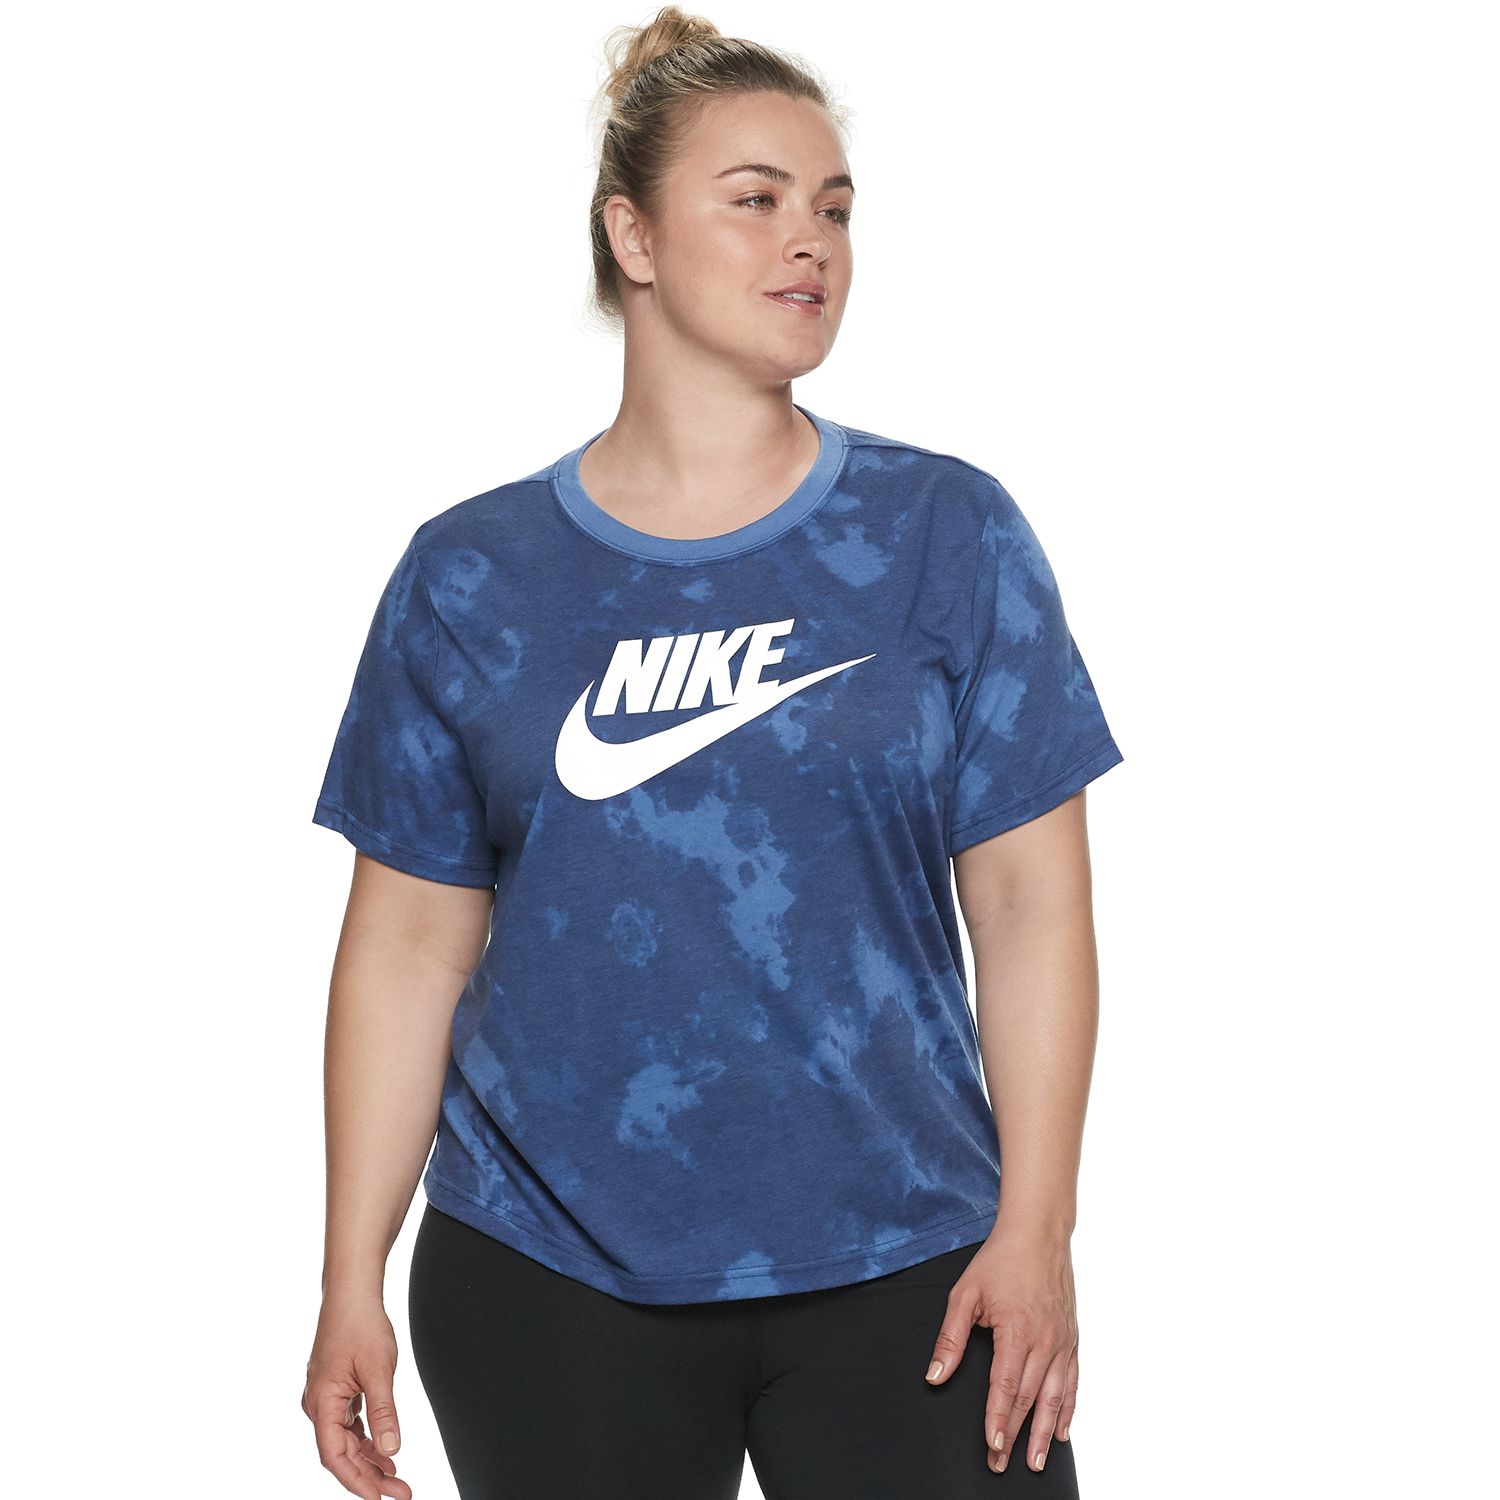 Women's Nike T-Shirts: Top Off Your 